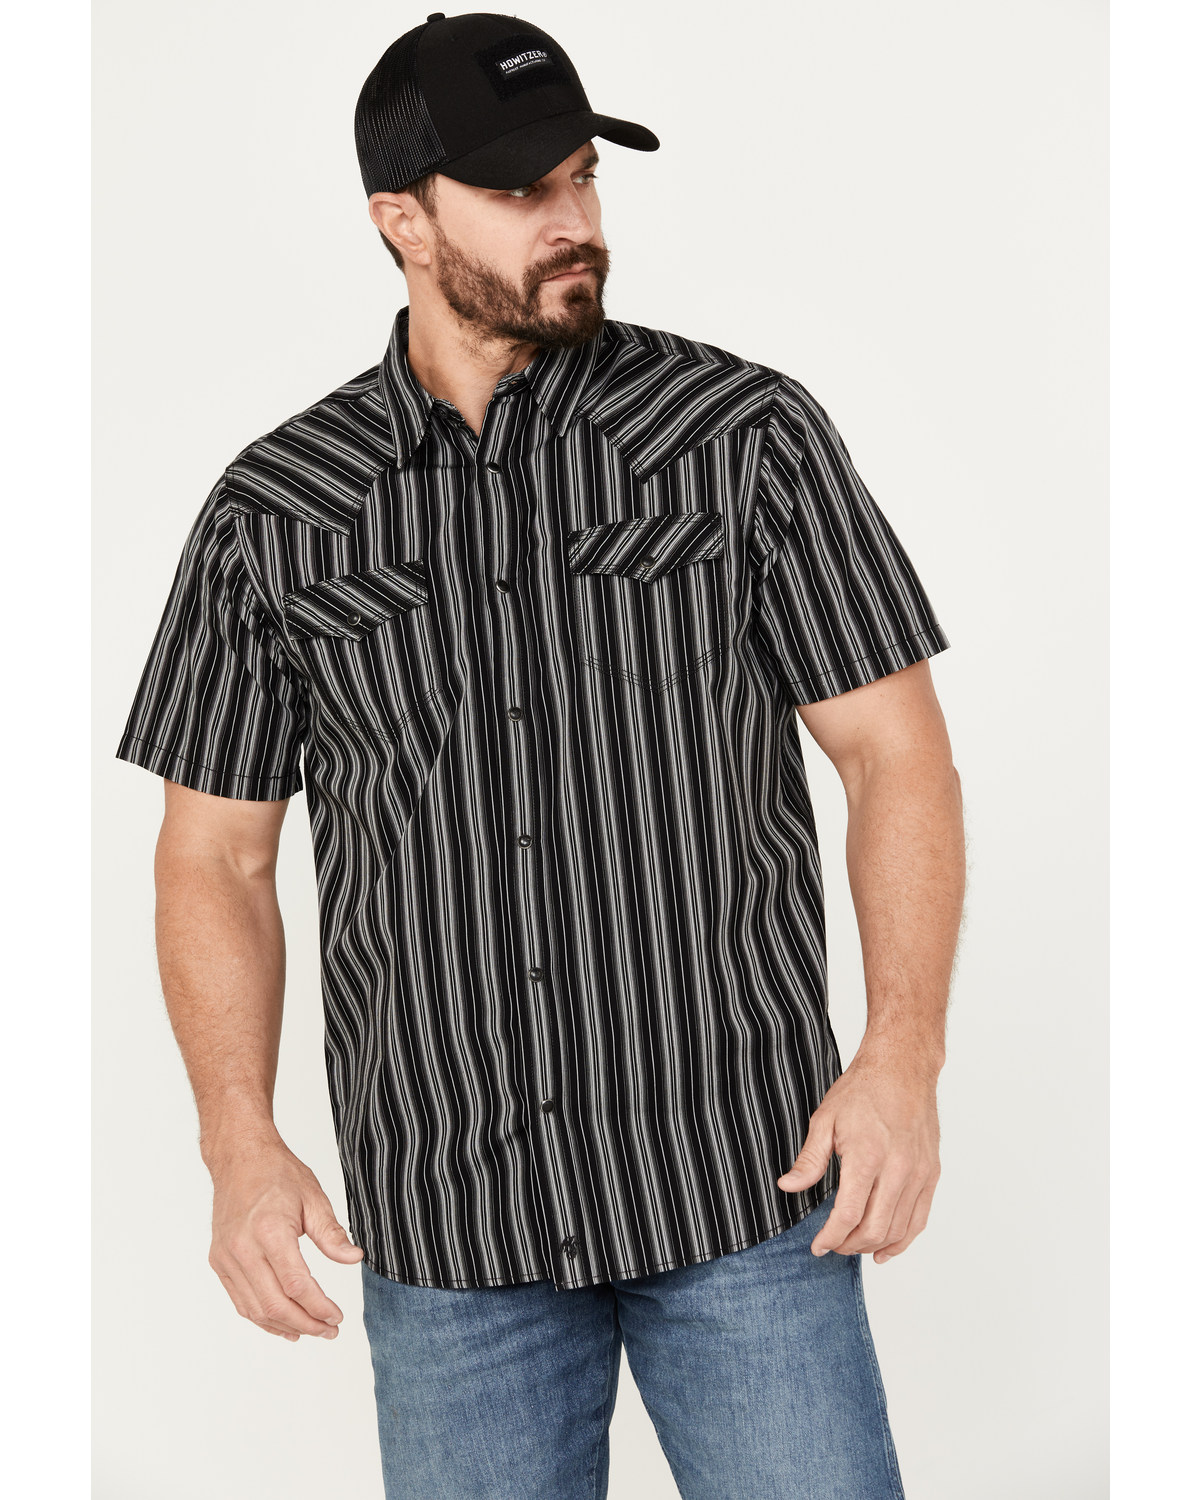 Moonshine Spirit Men's Capone Striped Short Sleeve Western Snap Shirt